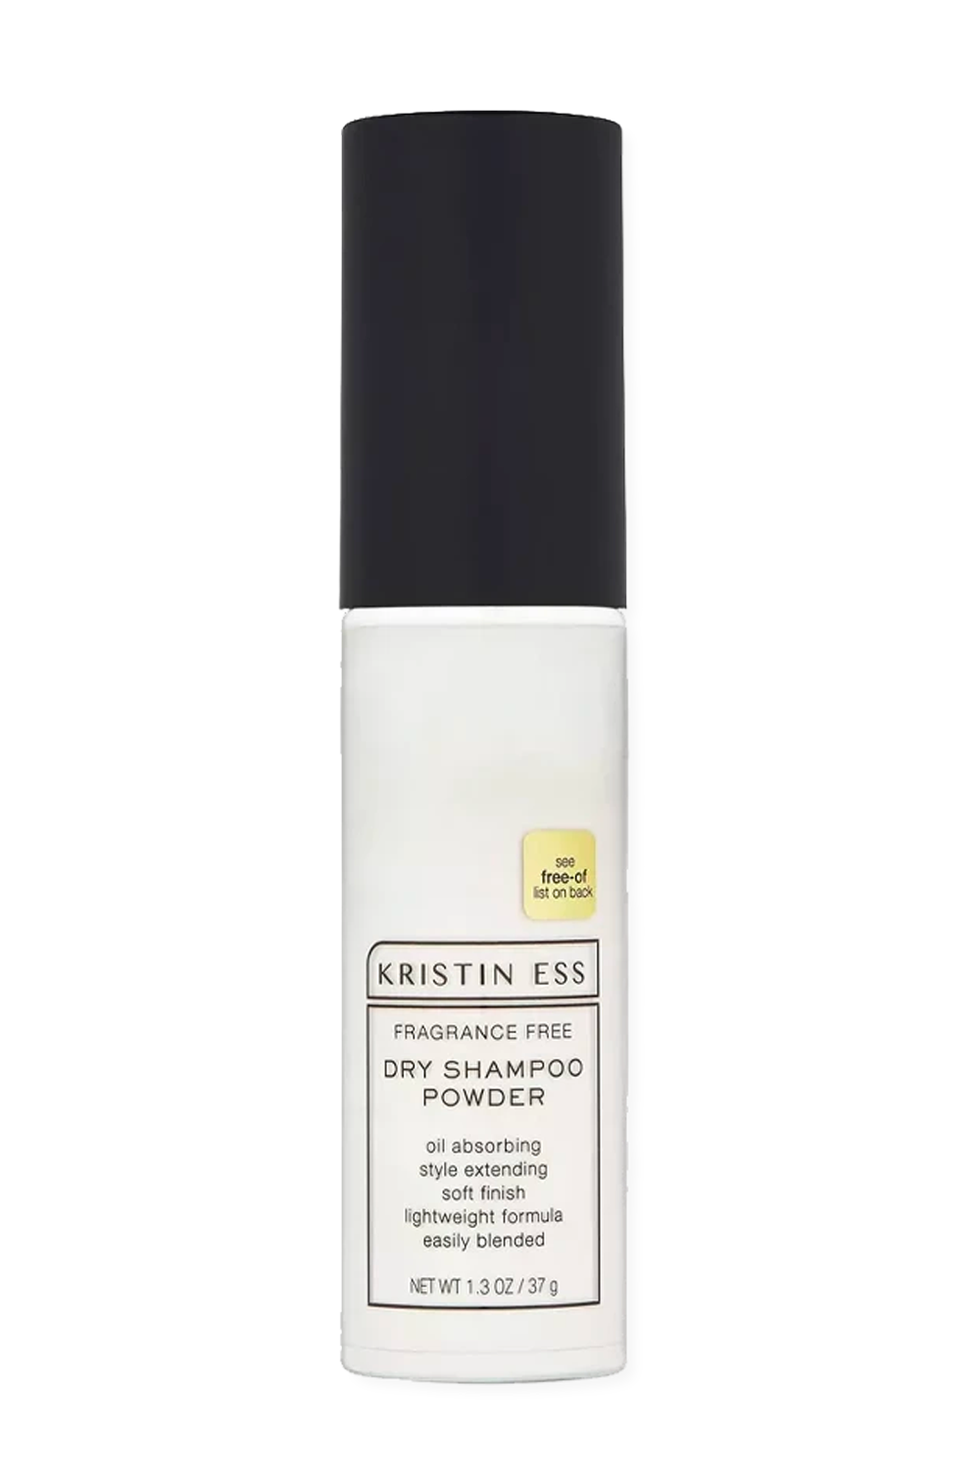 Kristin Ess Hair Fragrance Free Dry Shampoo Powder